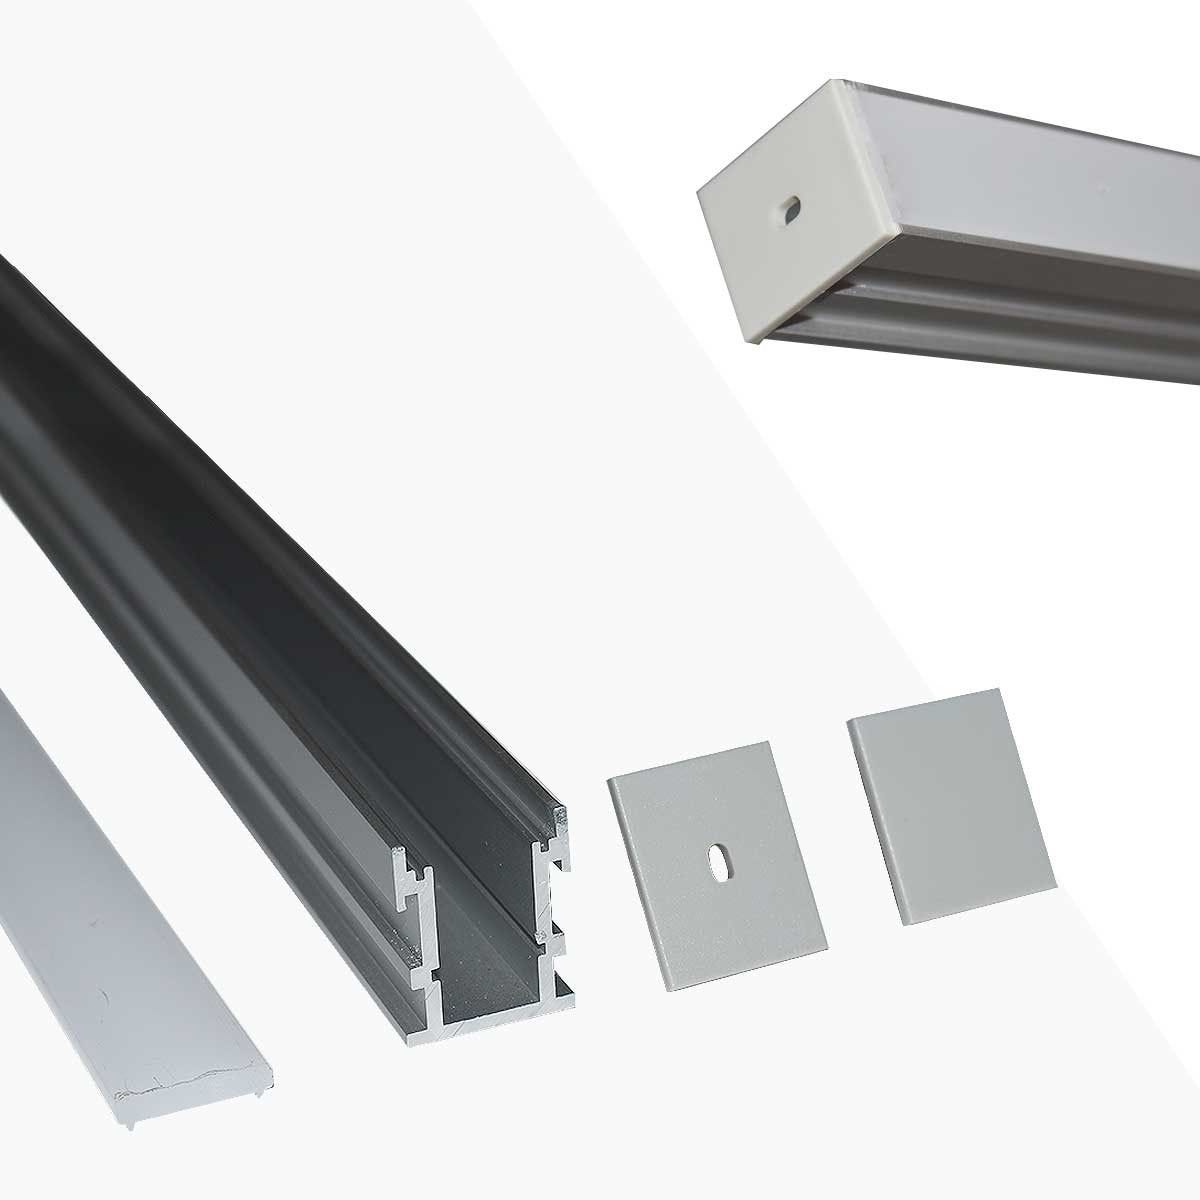 Perfil Aluminio para Tira LED -CON ALAS- 2 metros